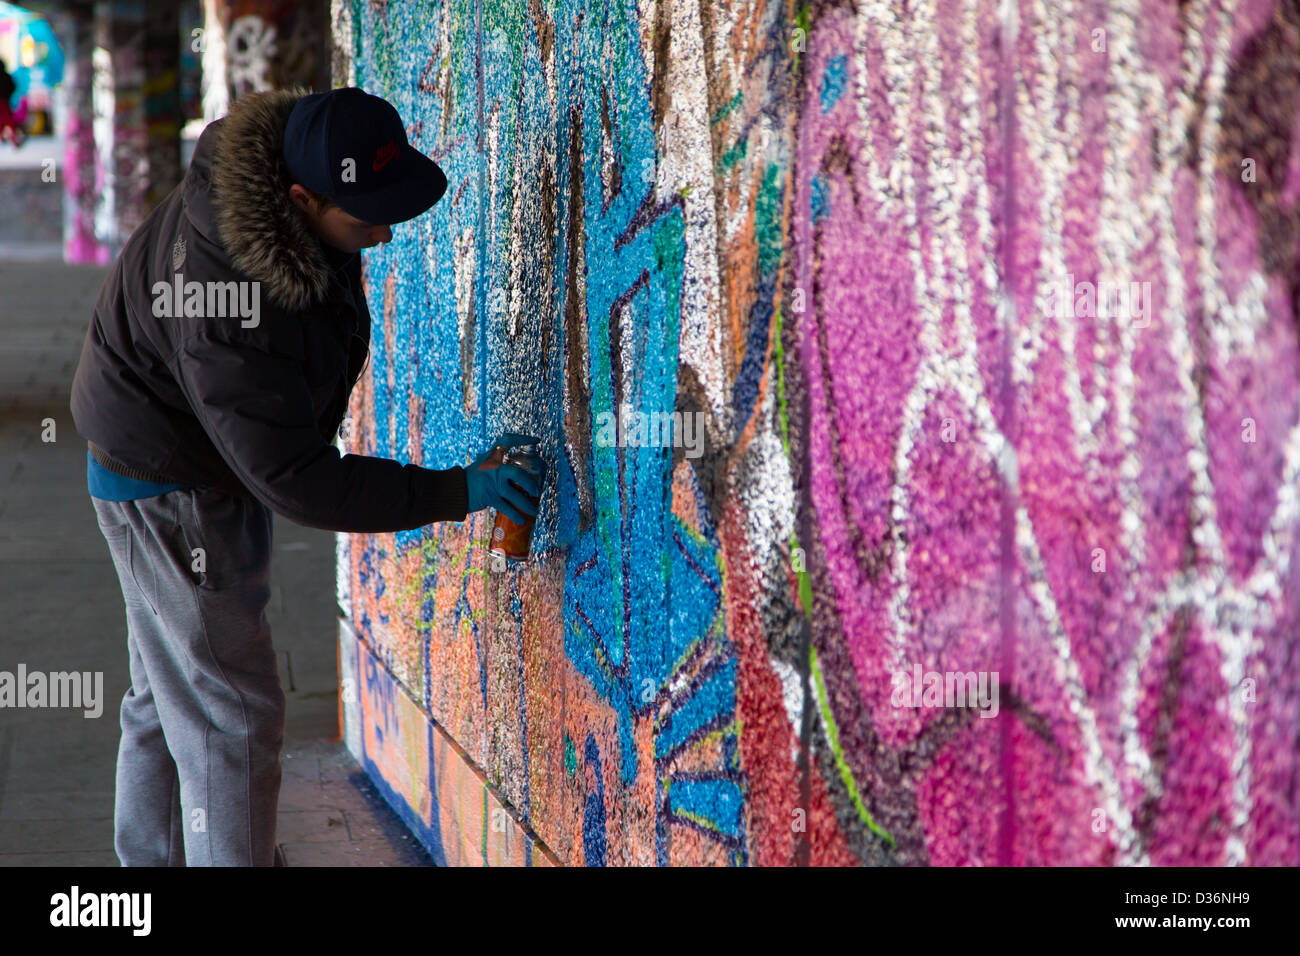 Graffiti-Künstler in Aktion, die Unterkirche, Southbank, London Stockfoto